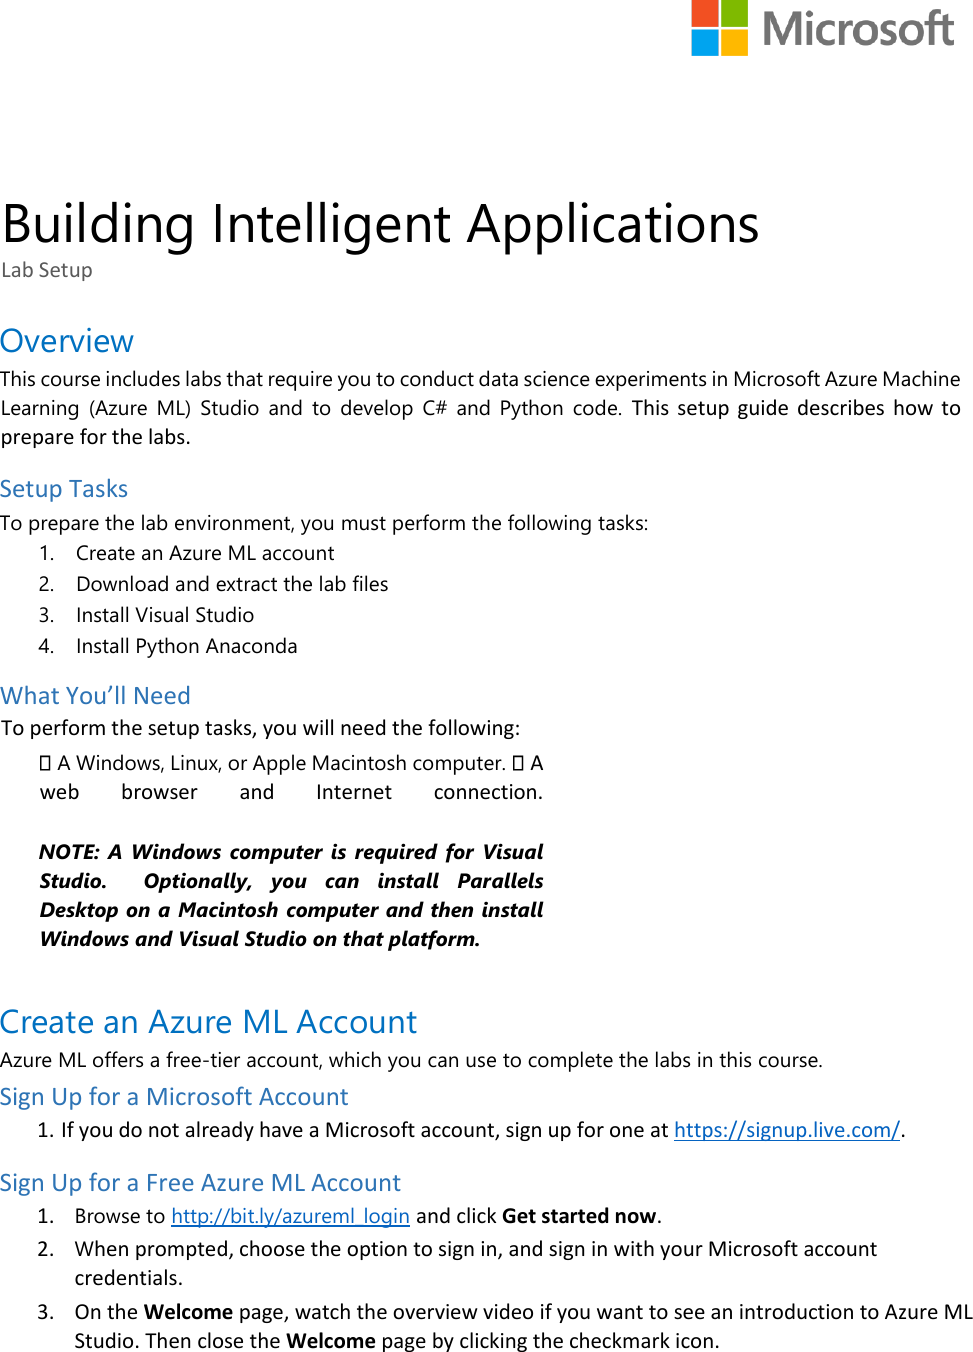 Microsoft azure guide pdf windows 7